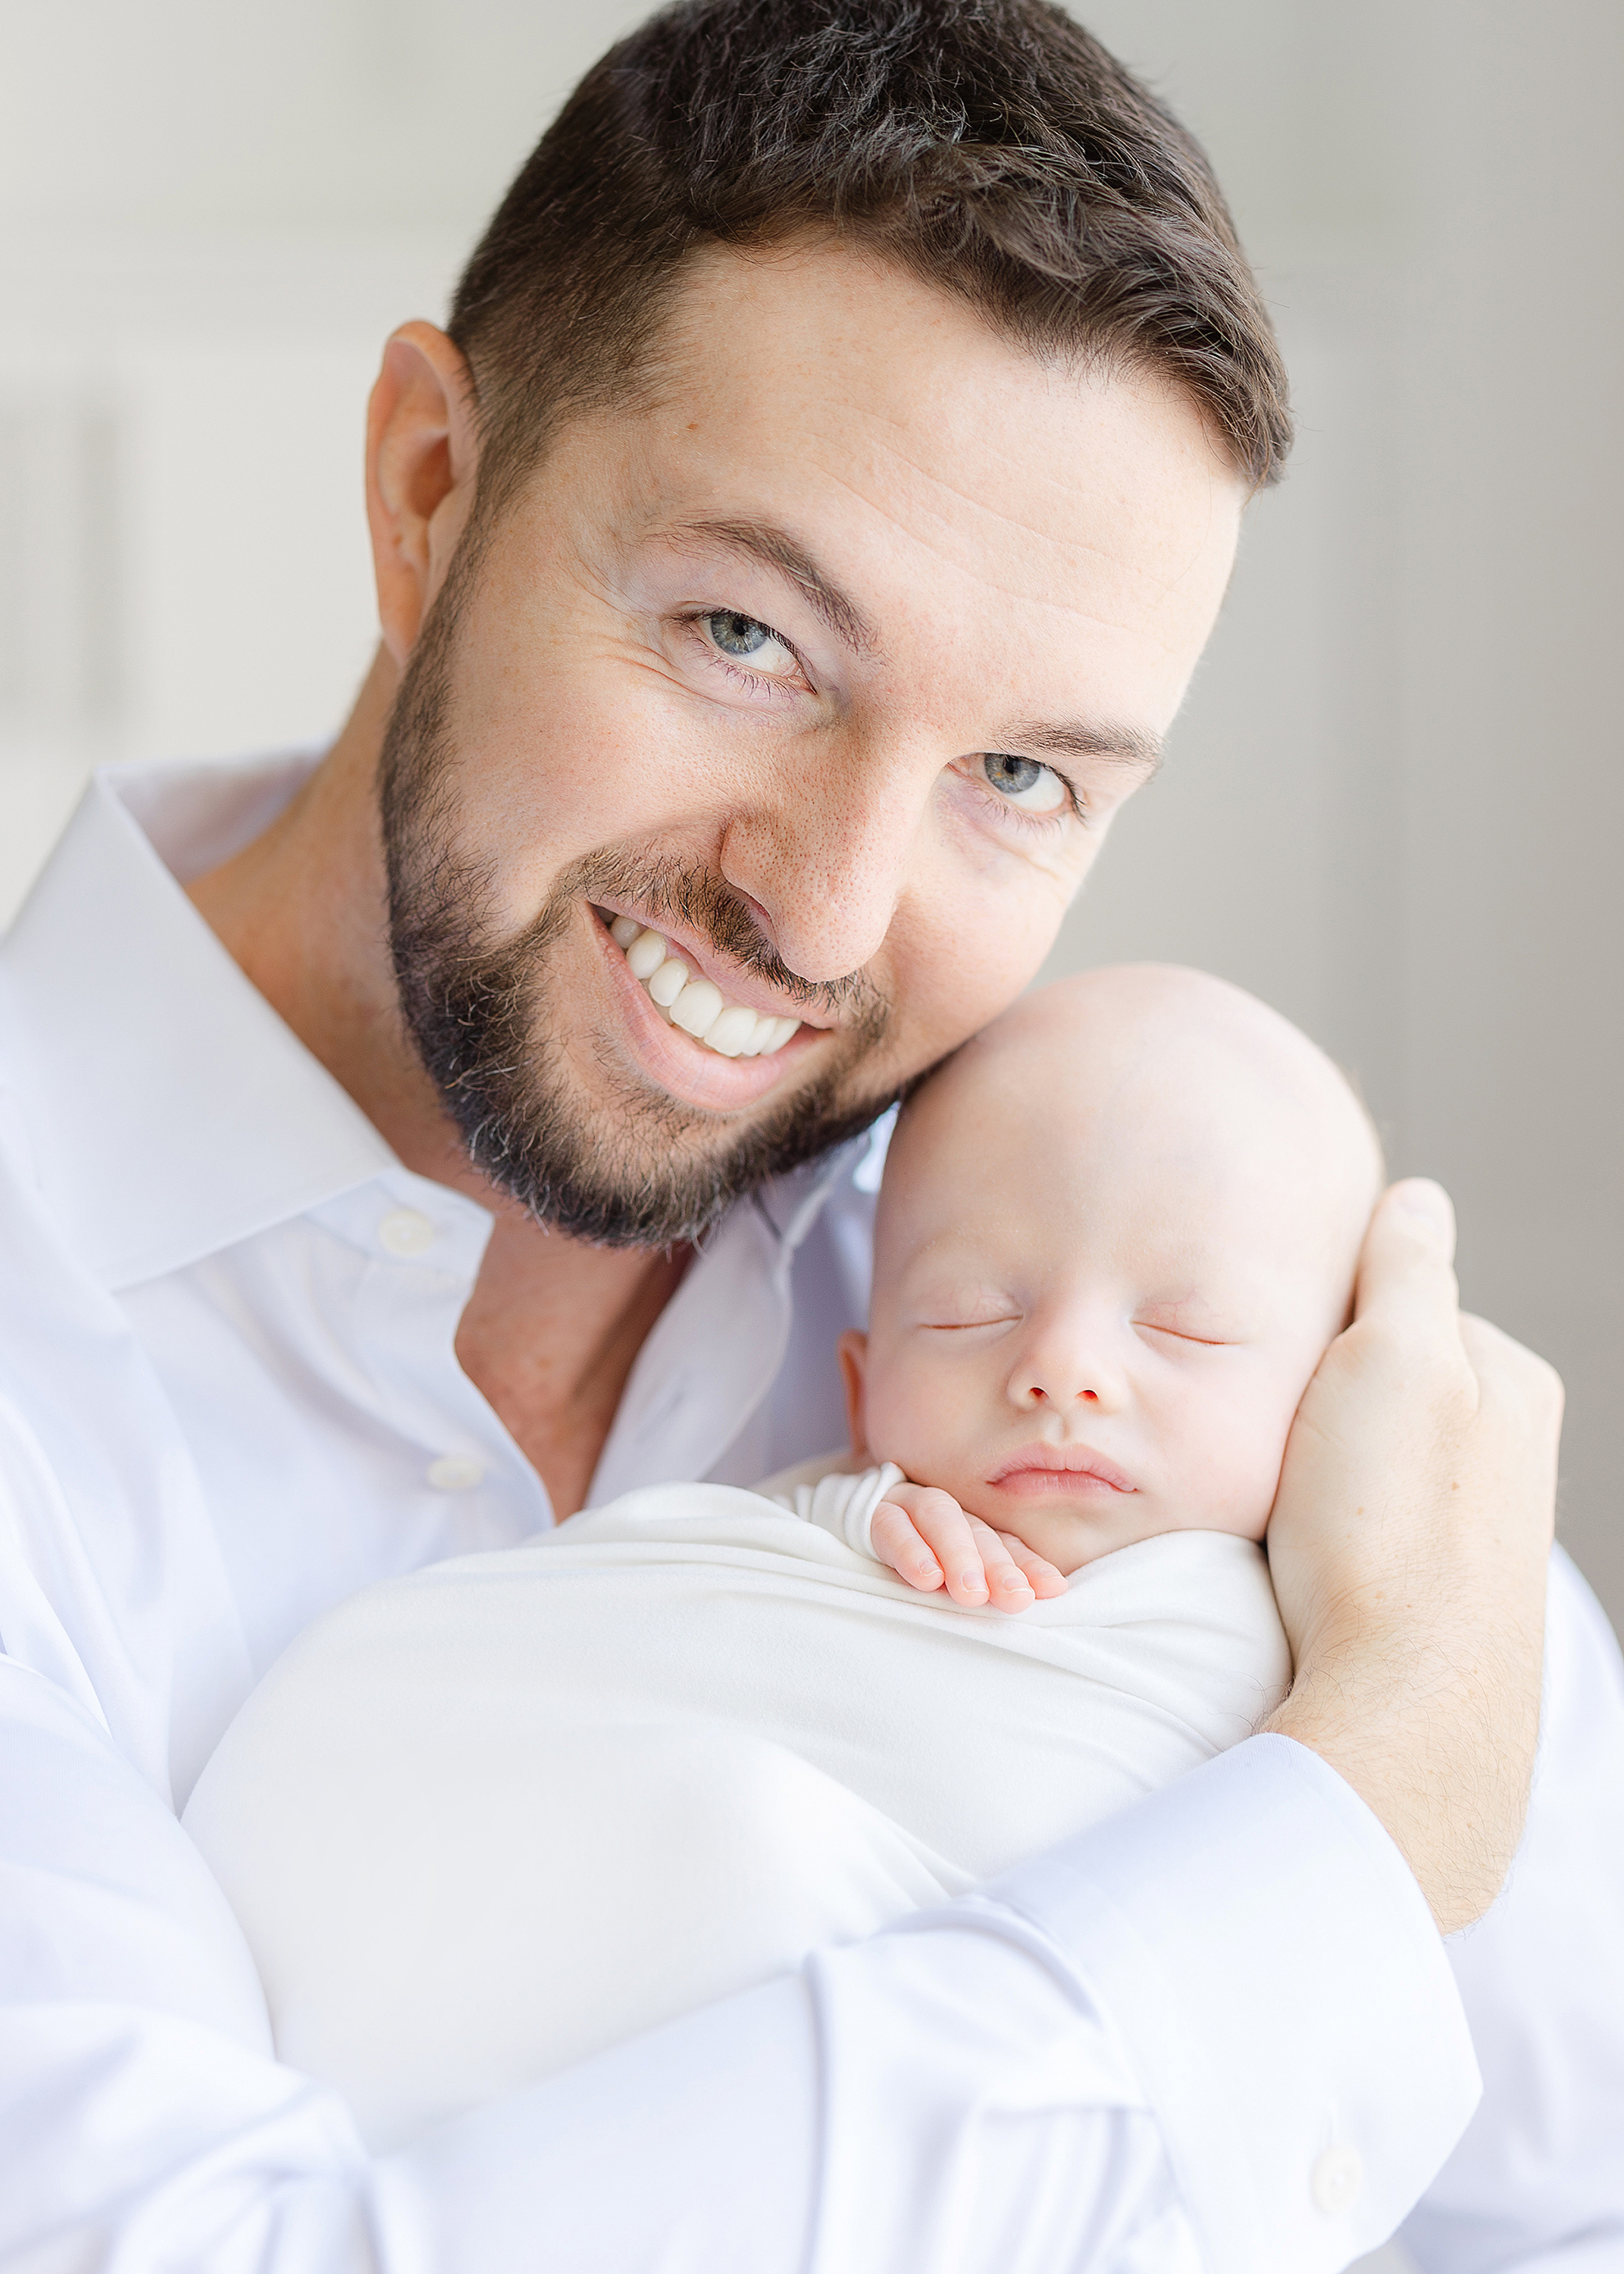 Man in white shirt holding newborn baby boy.